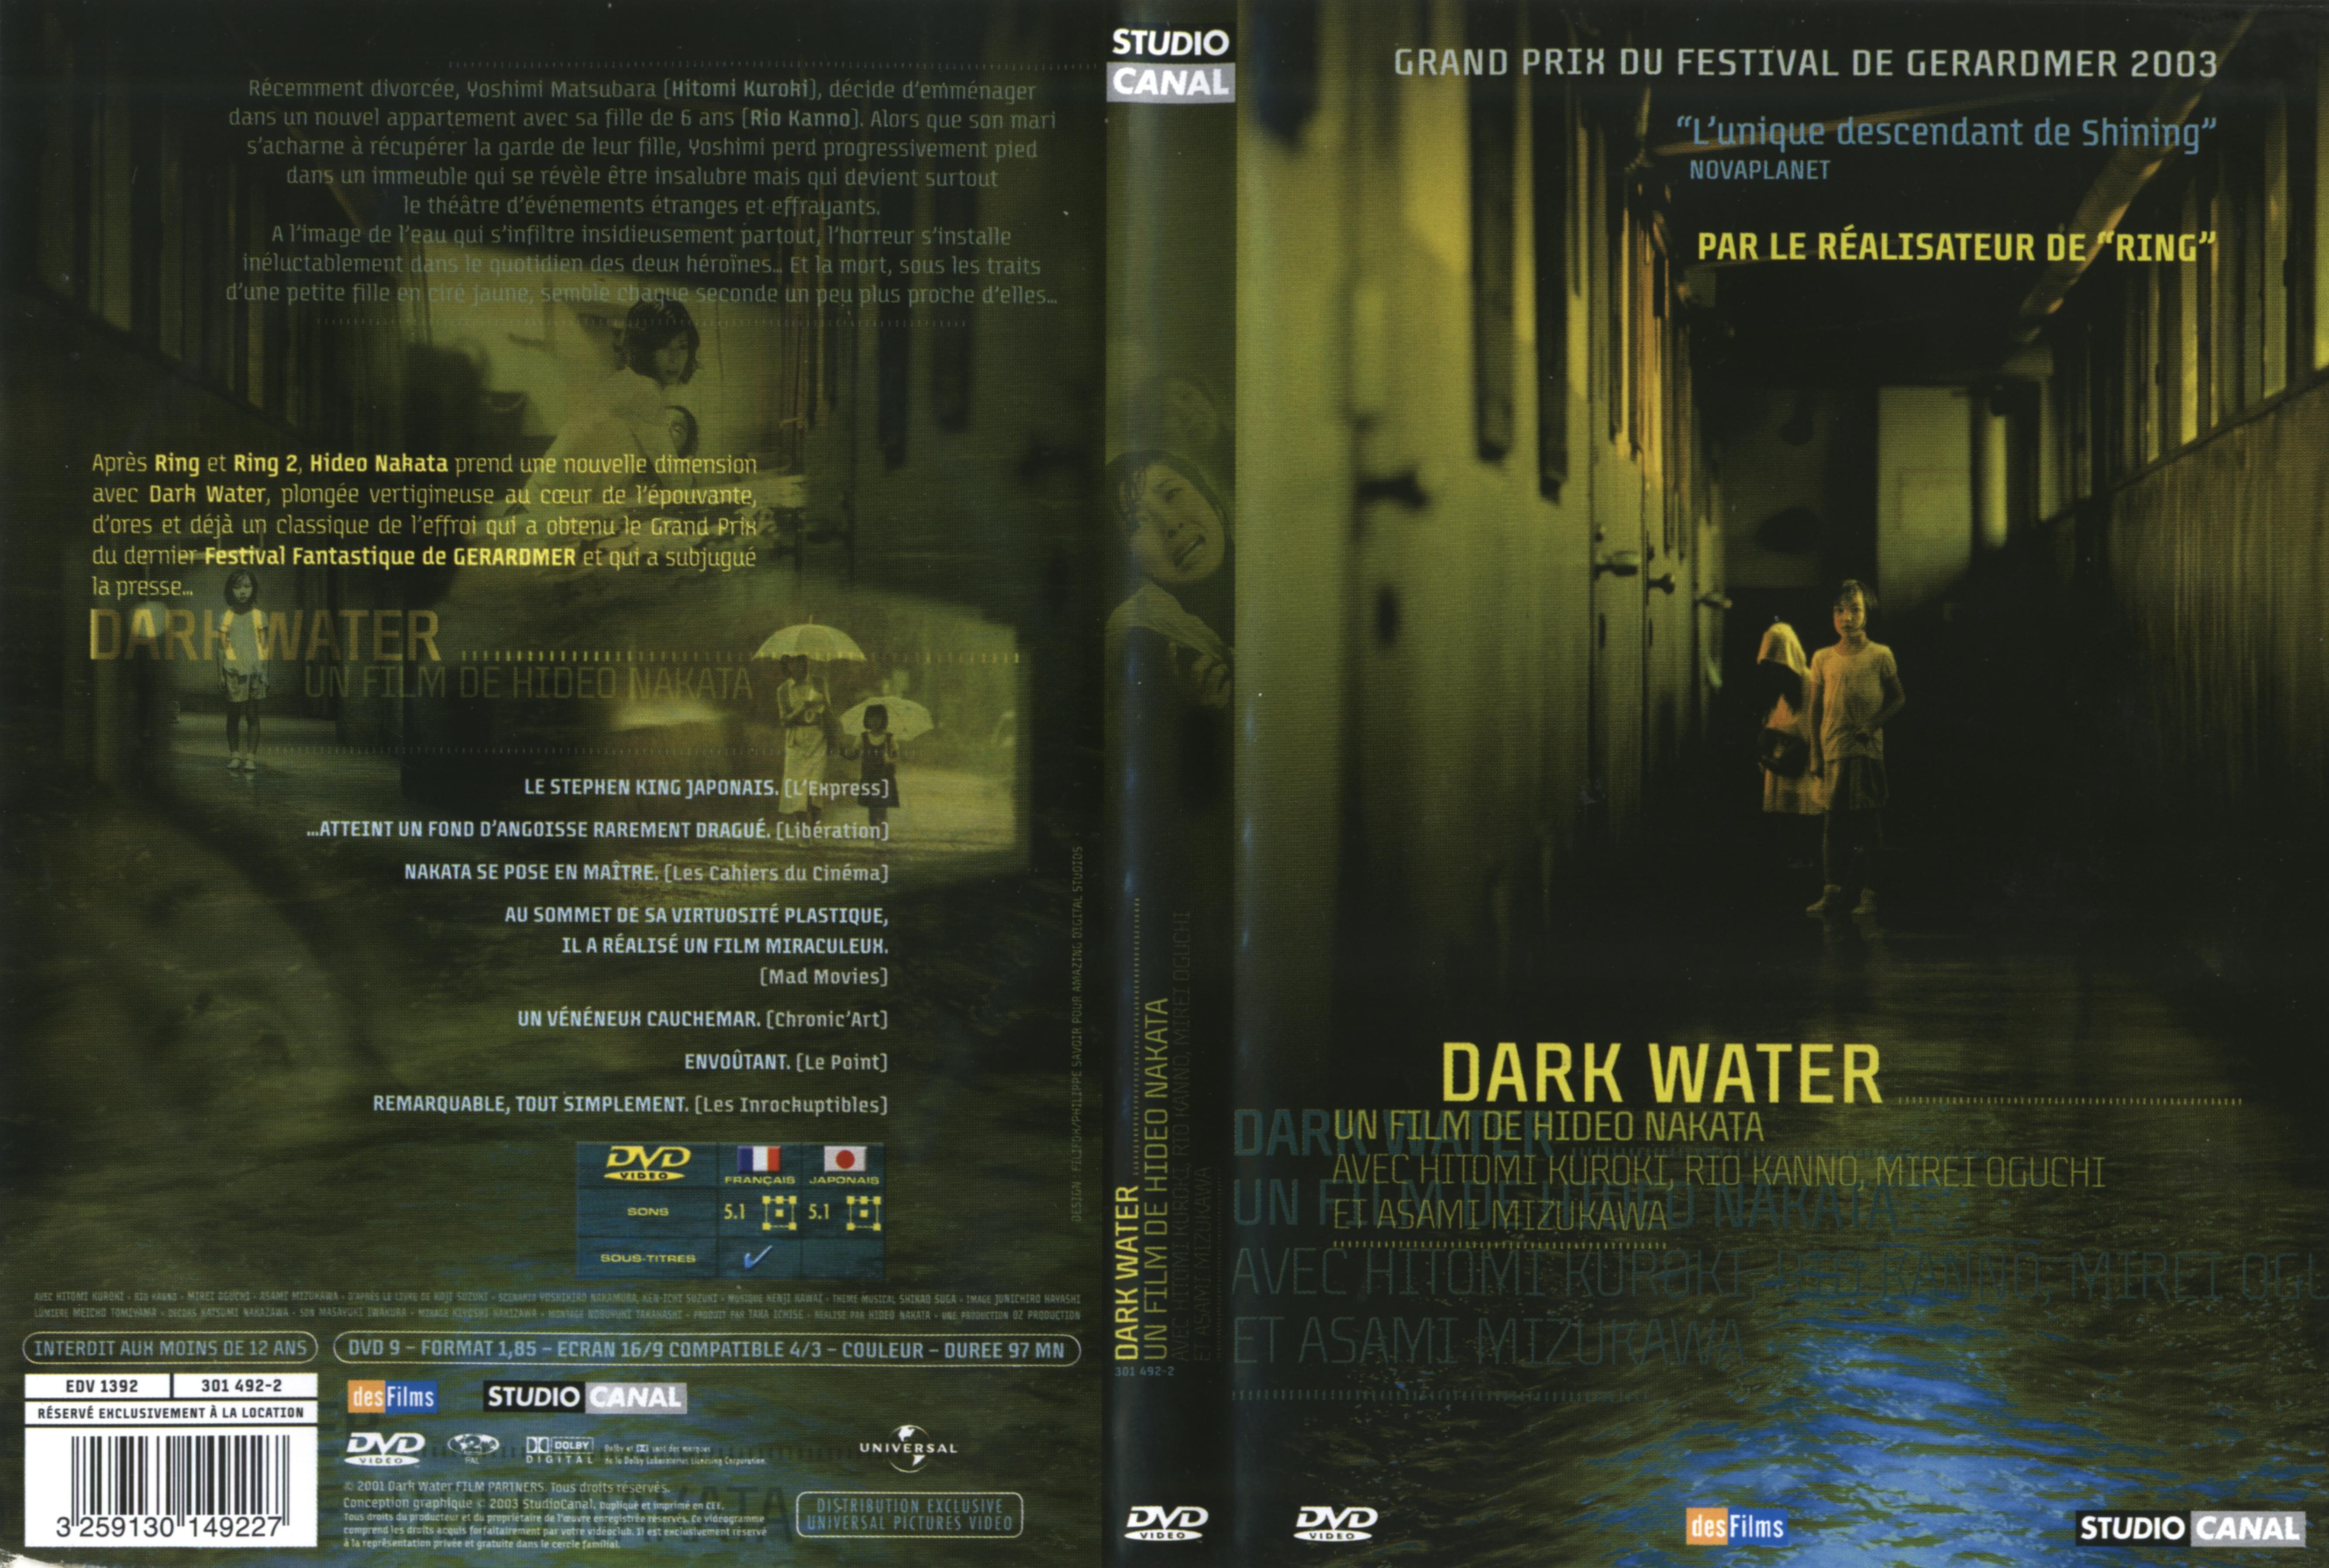 Jaquette DVD Dark water